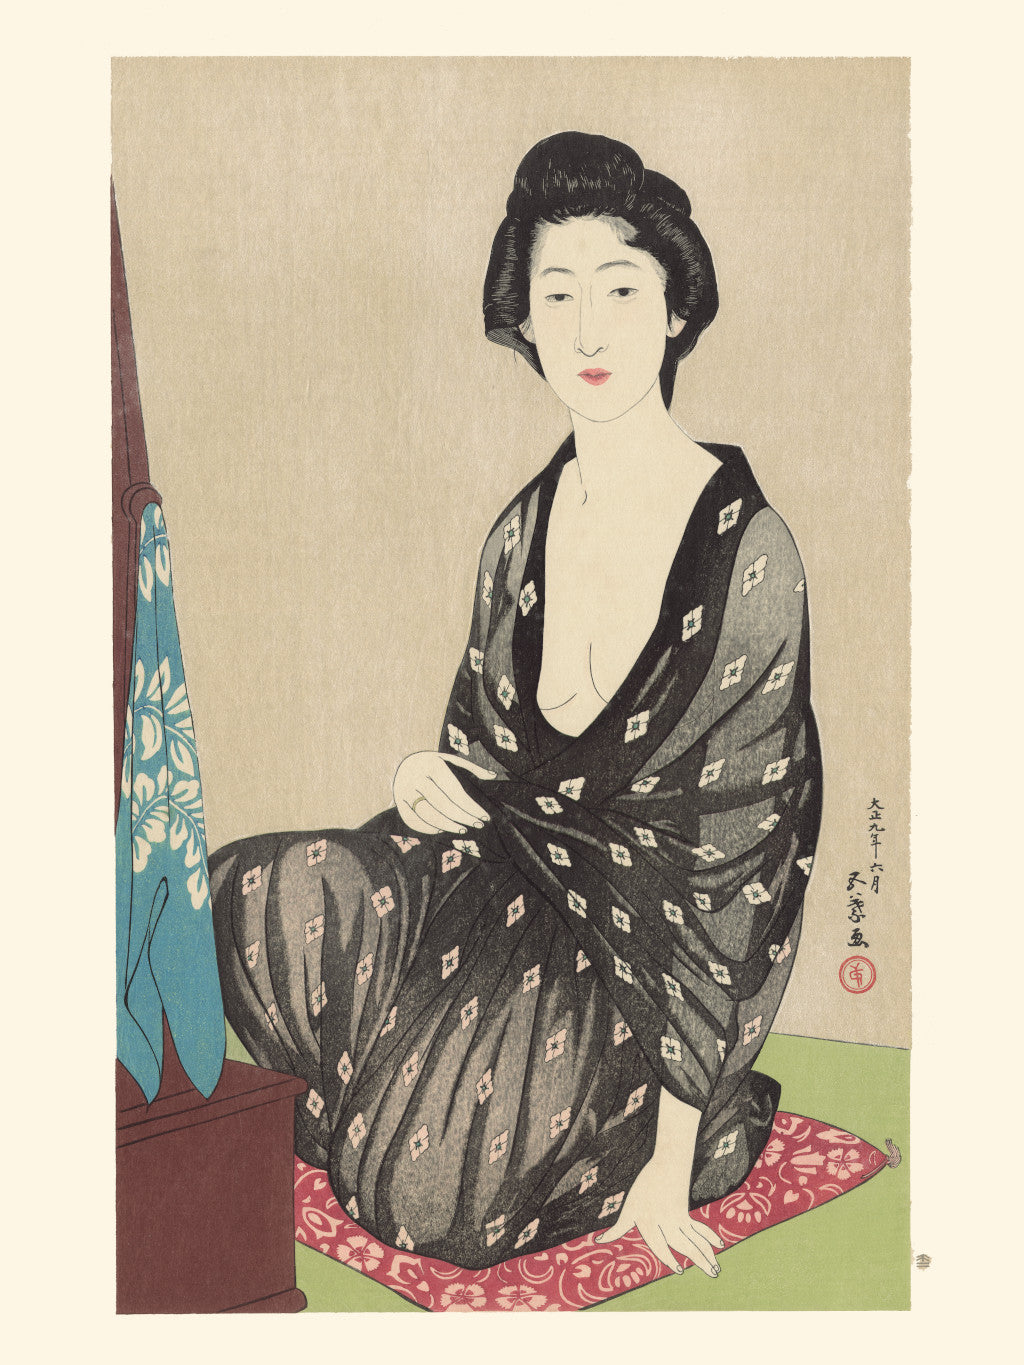 femme après le bain en yukata, kimono léger légèrement entrouvert sur sa poitrine